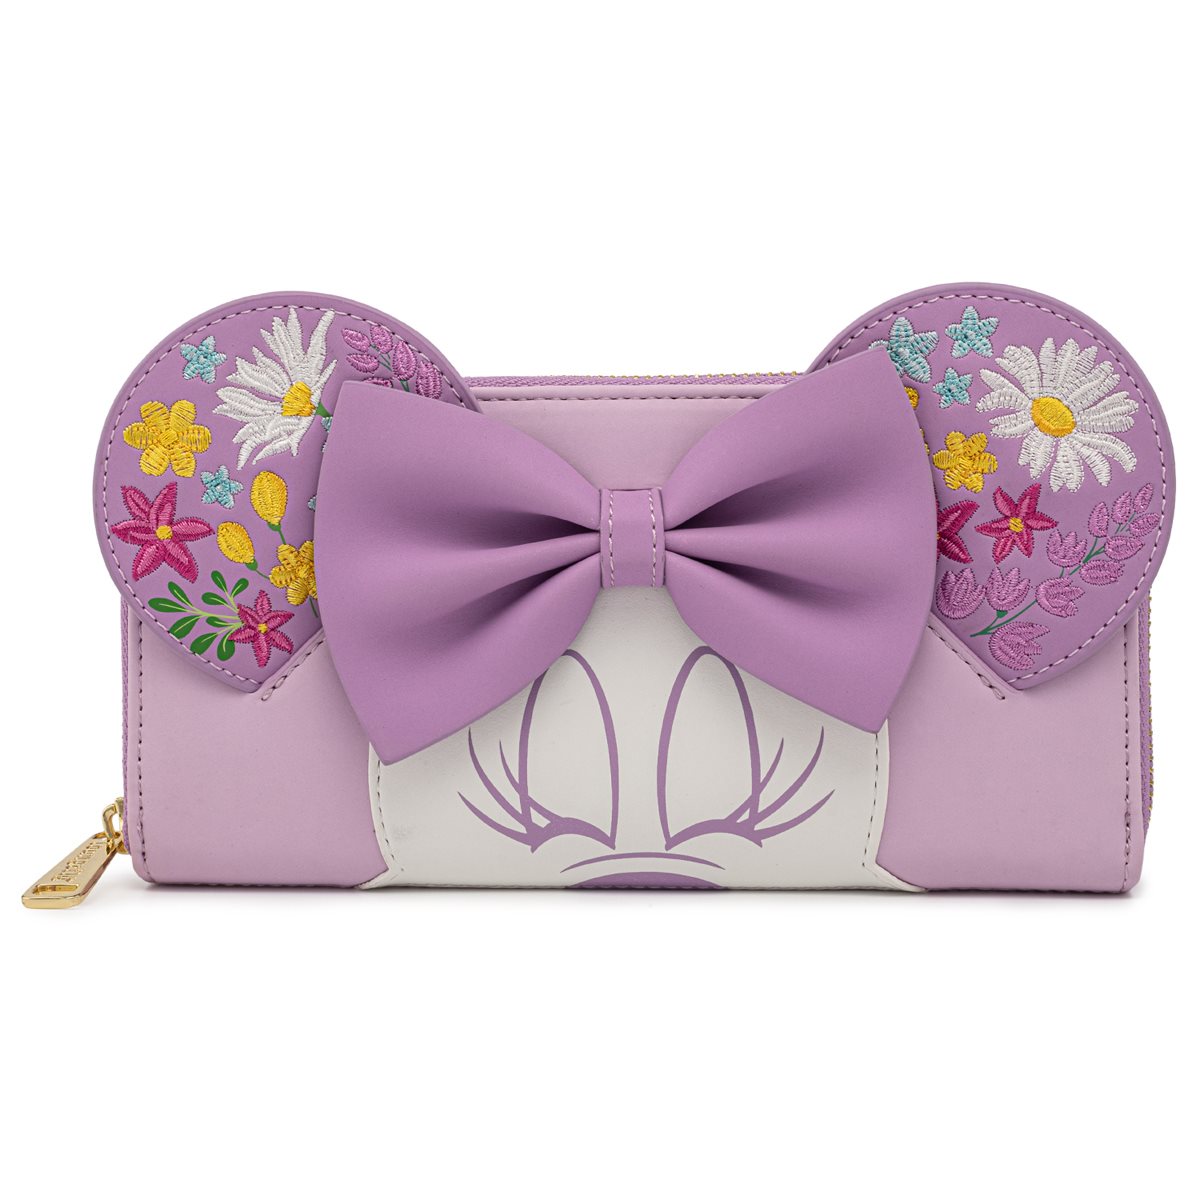 Disney Boutique Wallet - Minnie Mouse Cherry Blossom